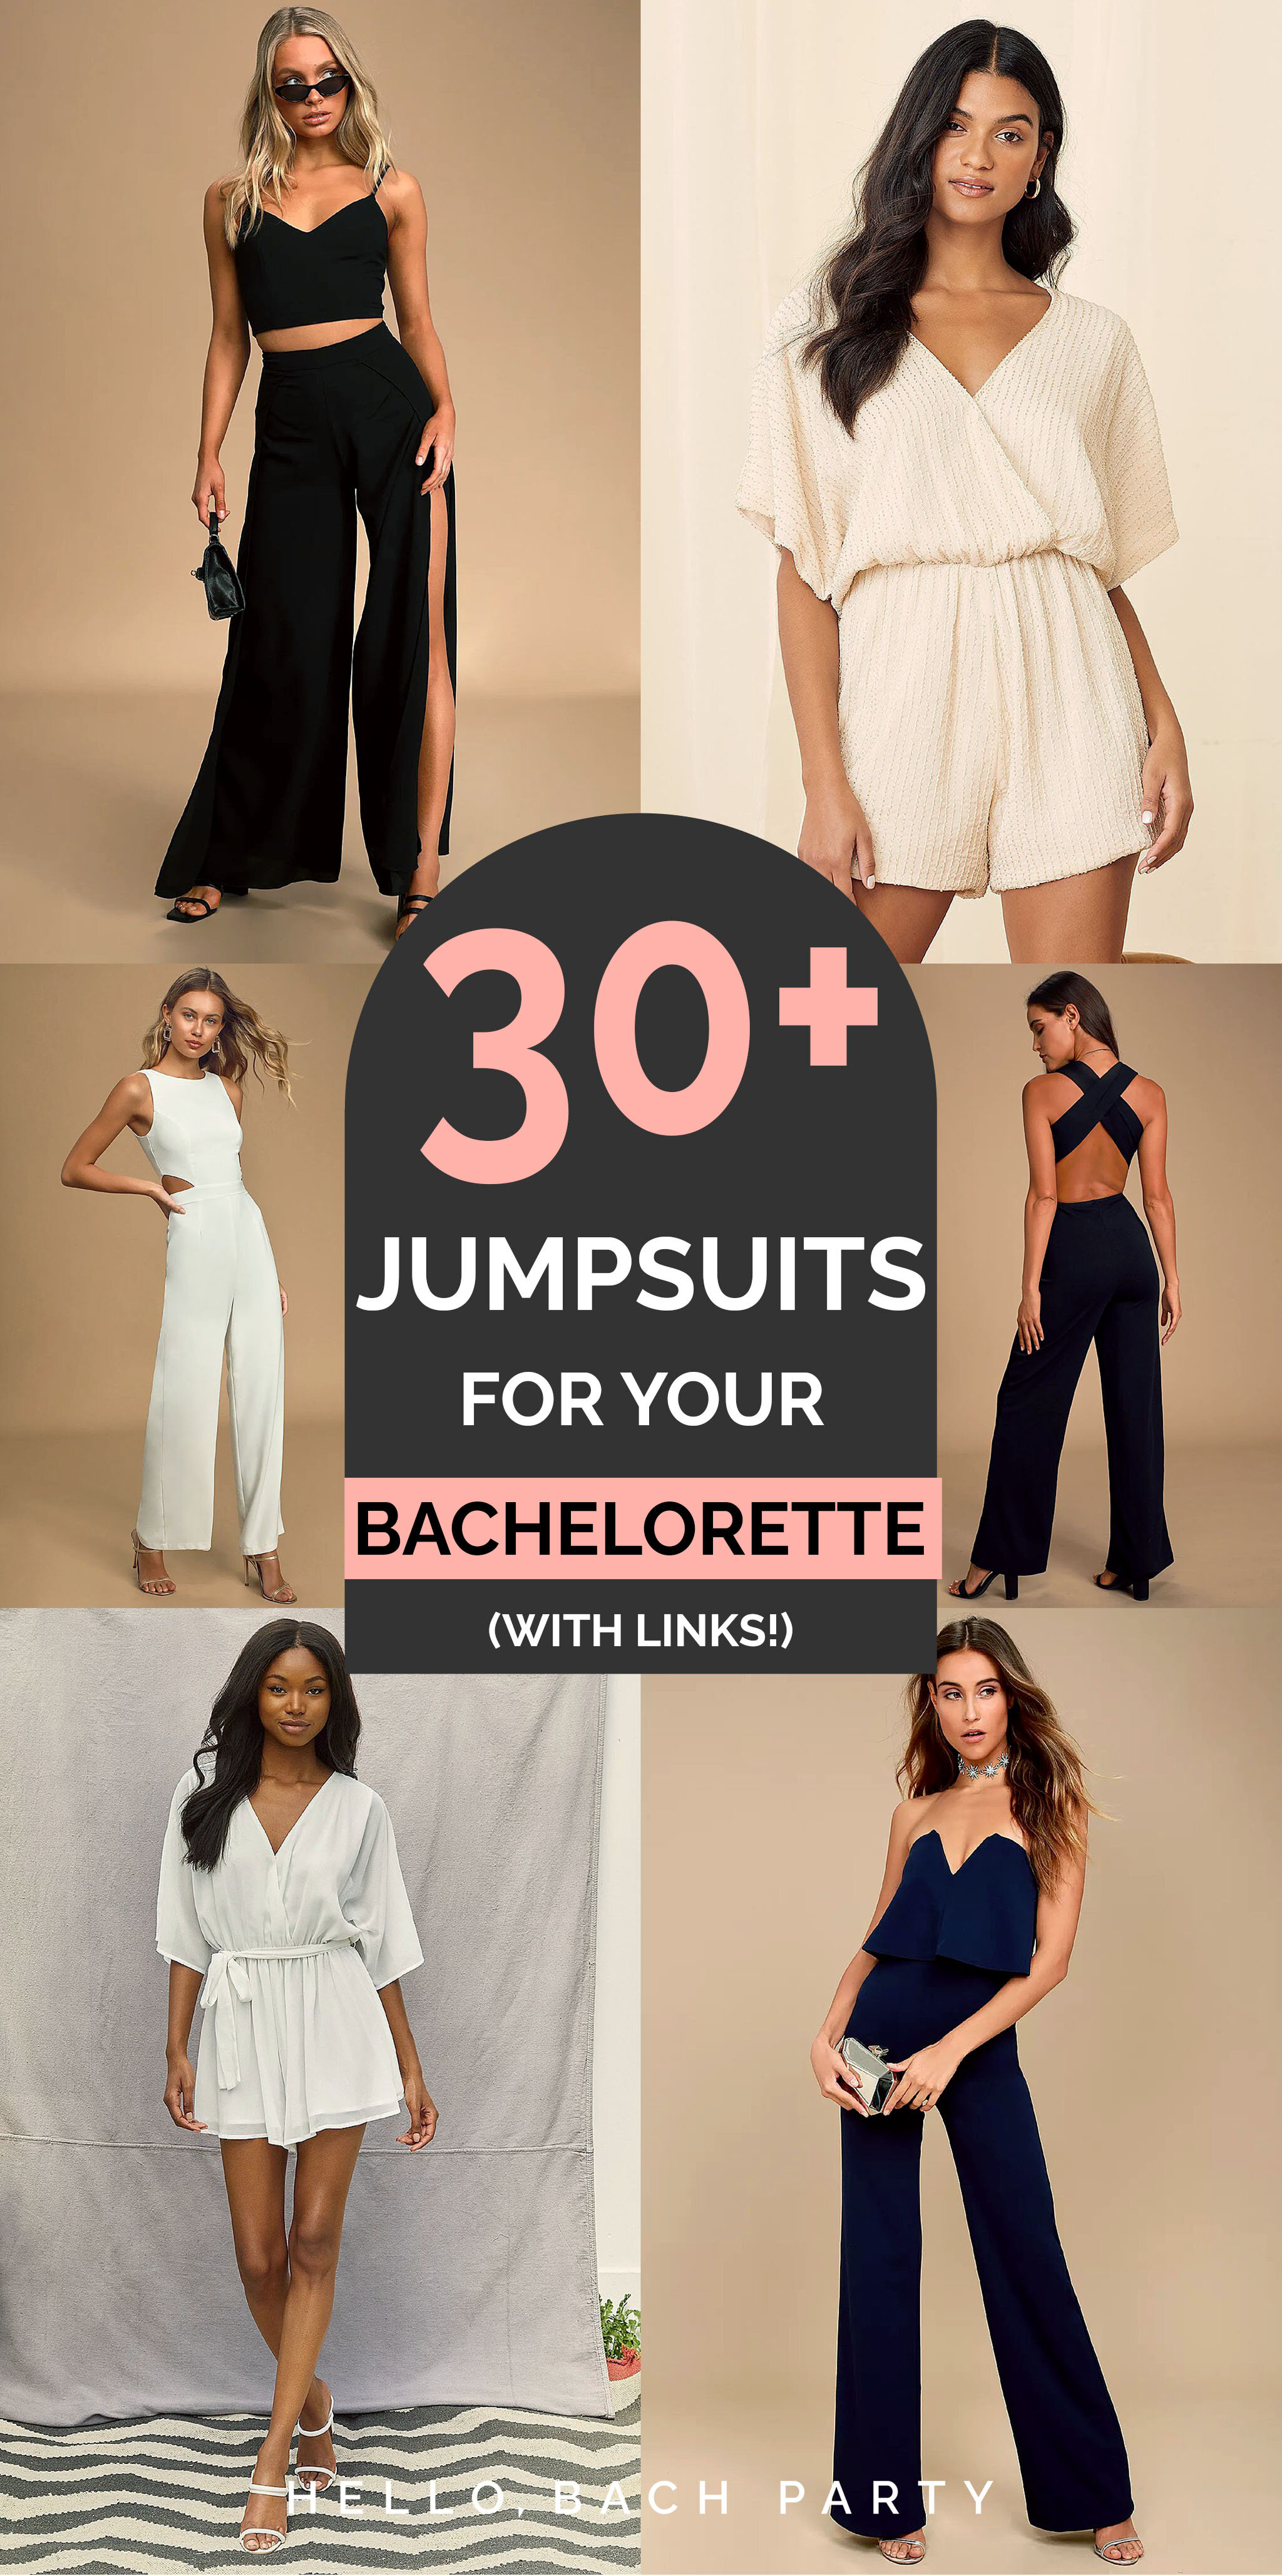 Aggregate more than 184 bachelorette party jumpsuits